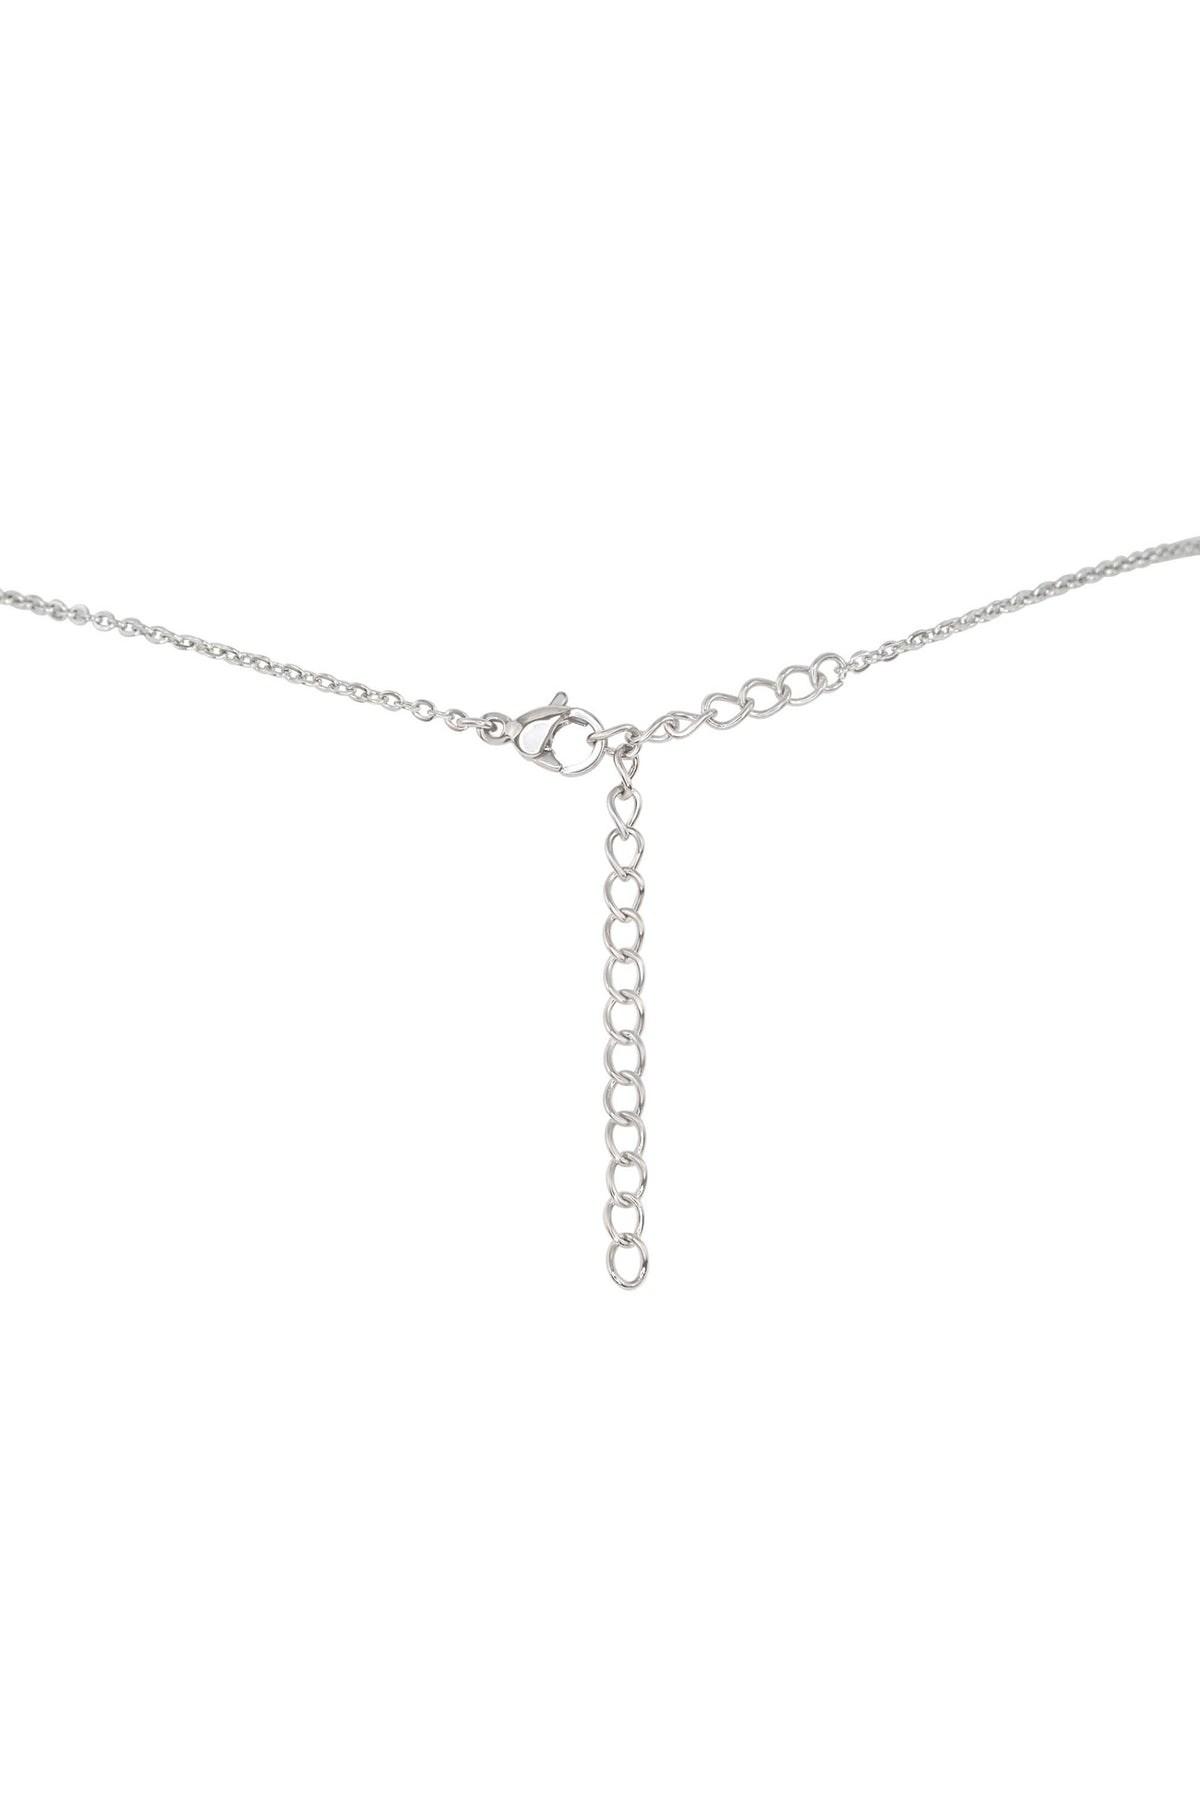 Raw Crystal Pendant Choker - Rose Quartz - Stainless Steel - Luna Tide Handmade Jewellery